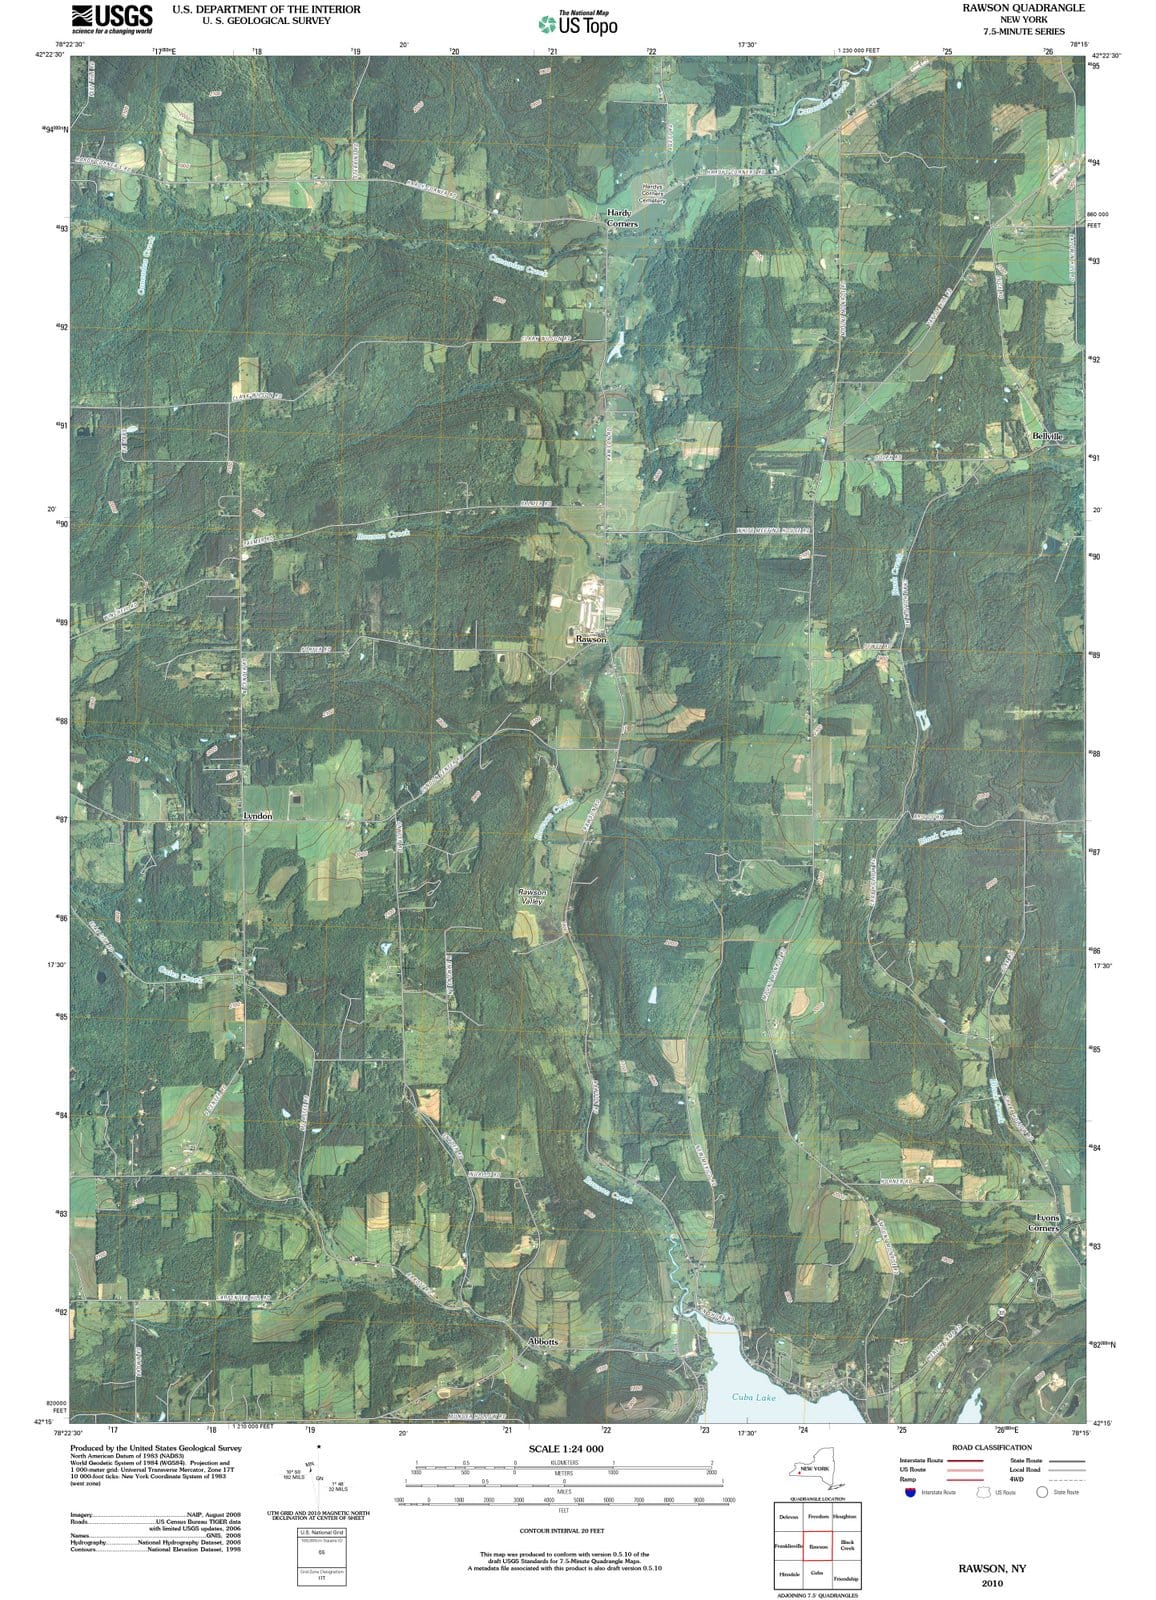 2010 Rawson, NY - New York - USGS Topographic Map